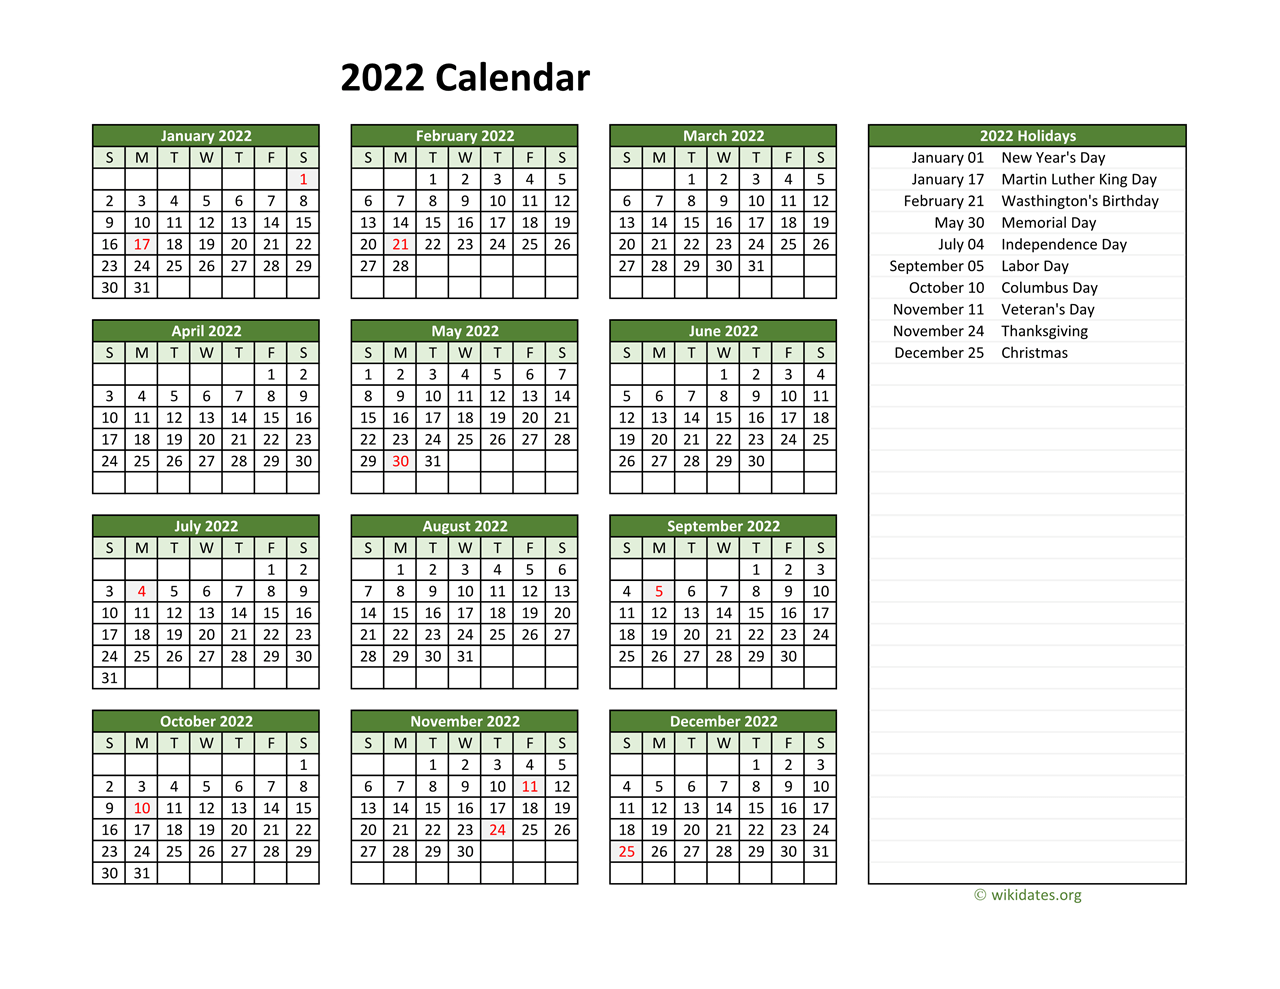 printable 2022 calendar with federal holidays wikidatesorg